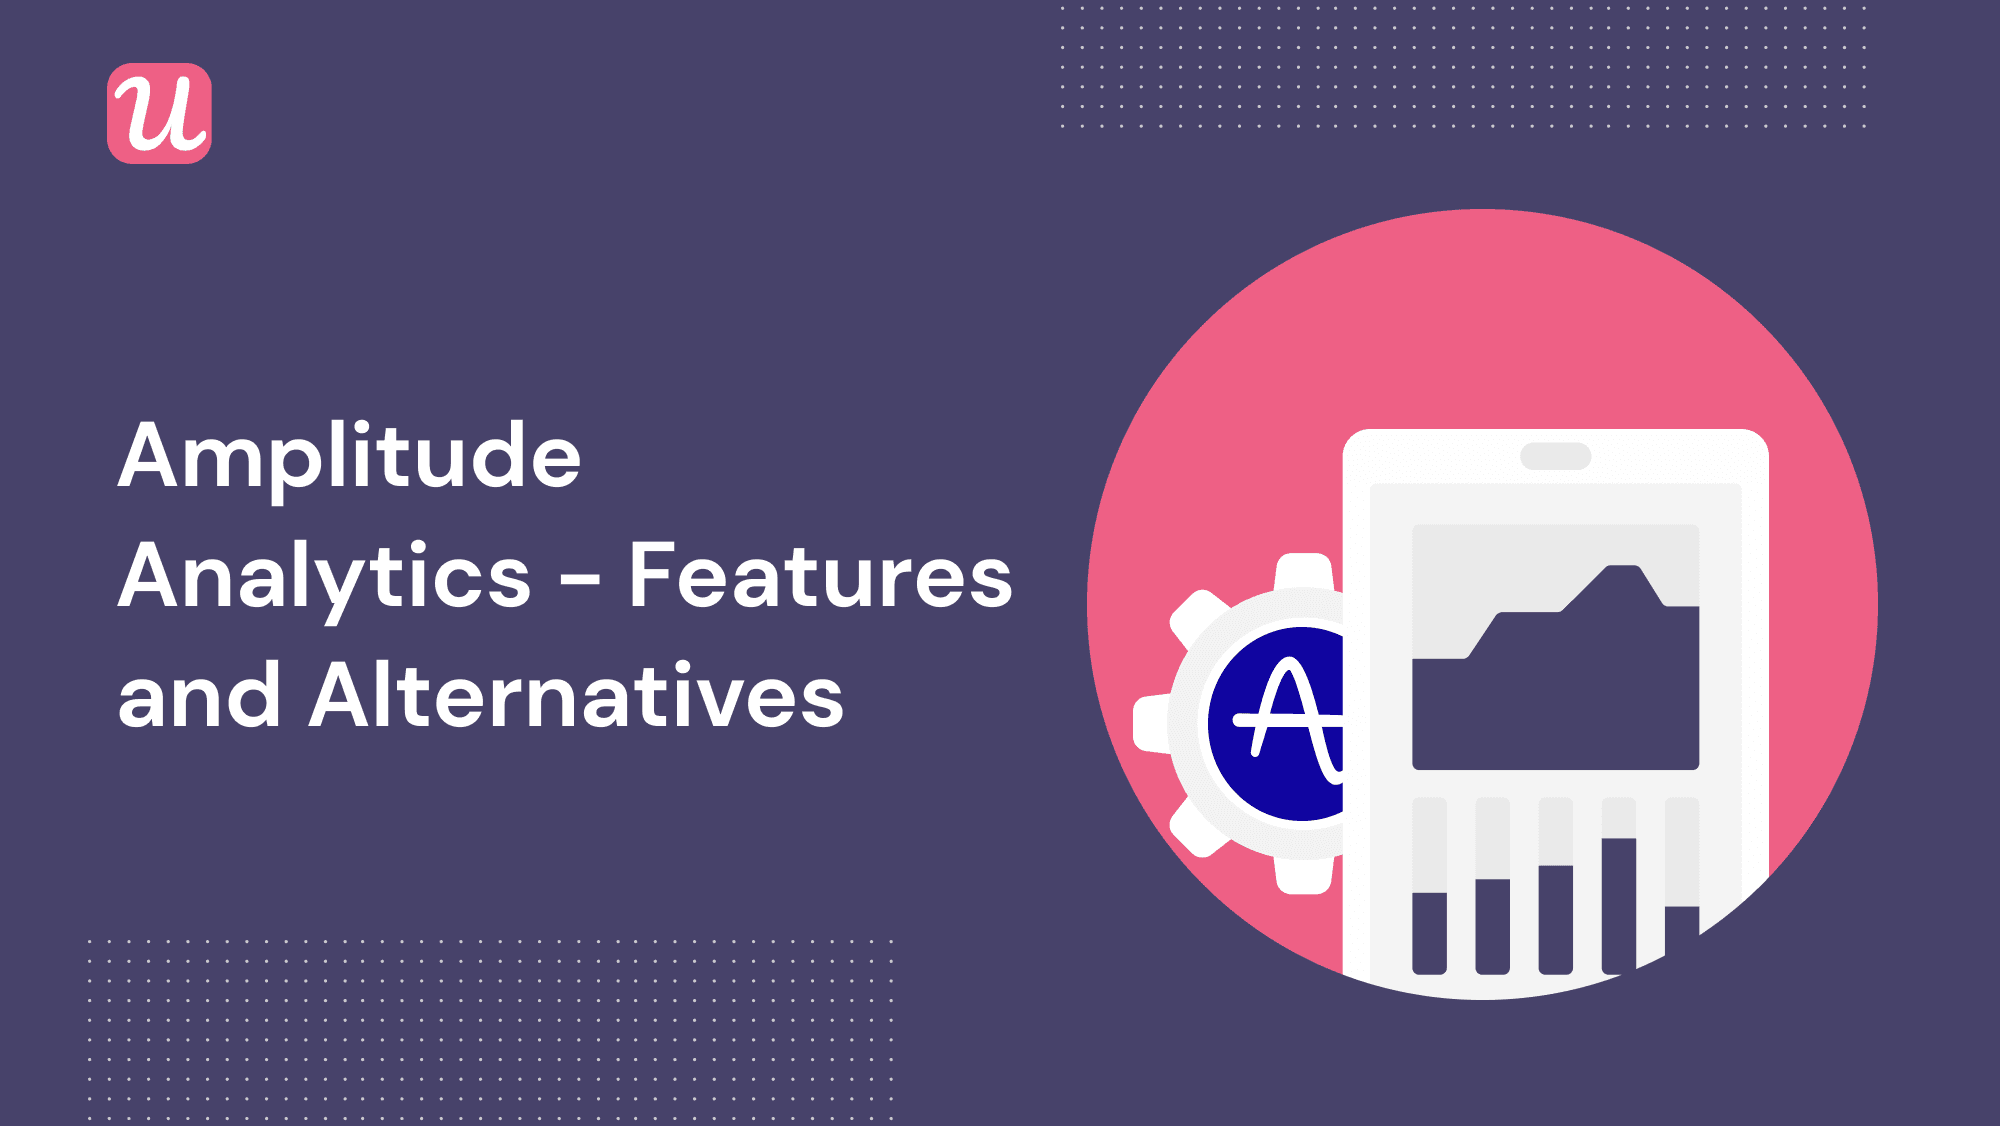 Amplitude Analytics - Features and Alternatives